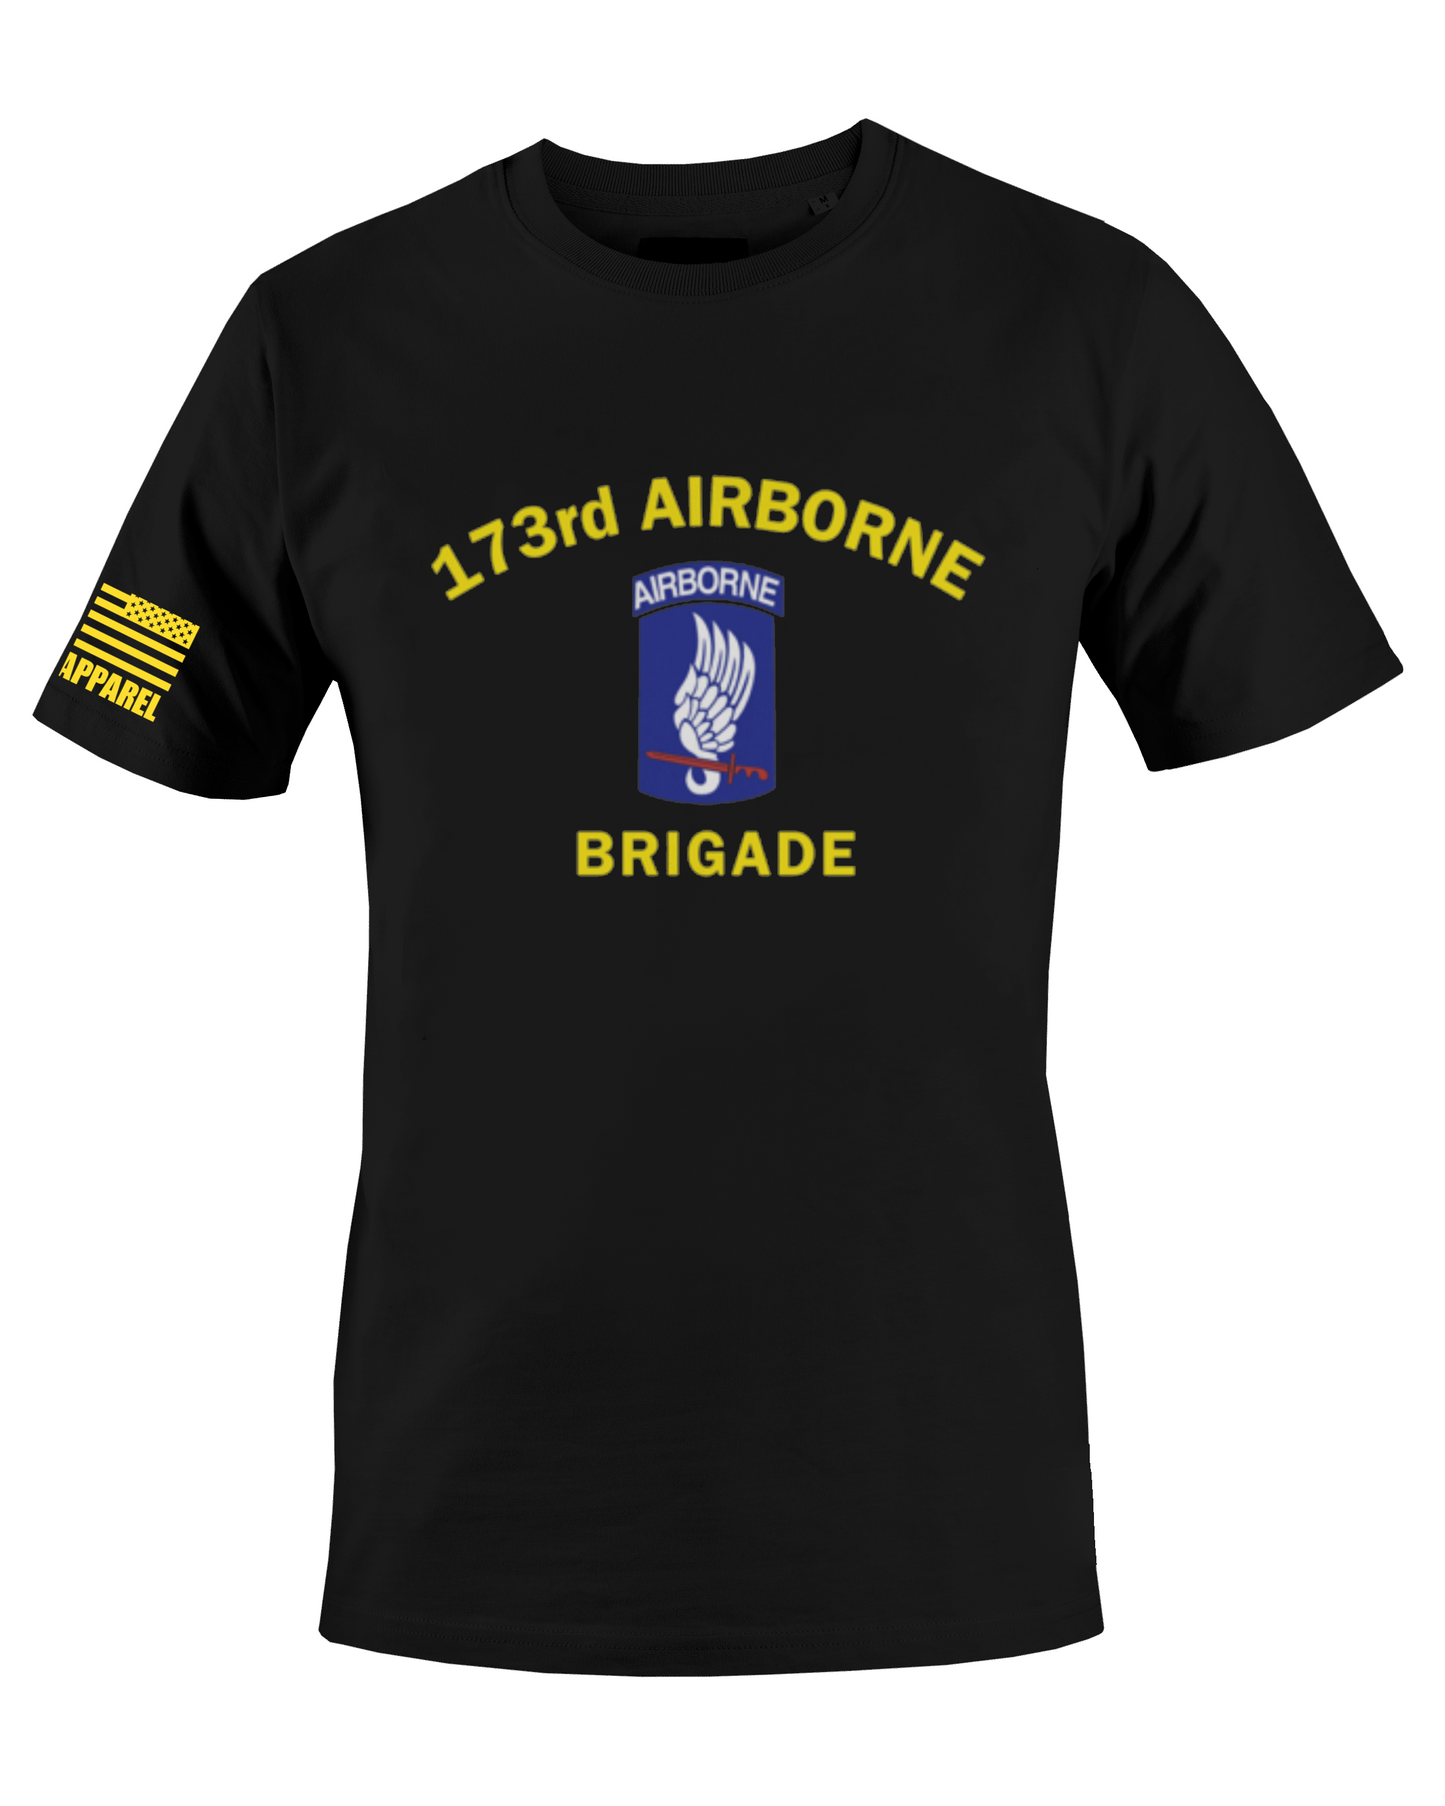 173rd AIRBORNE